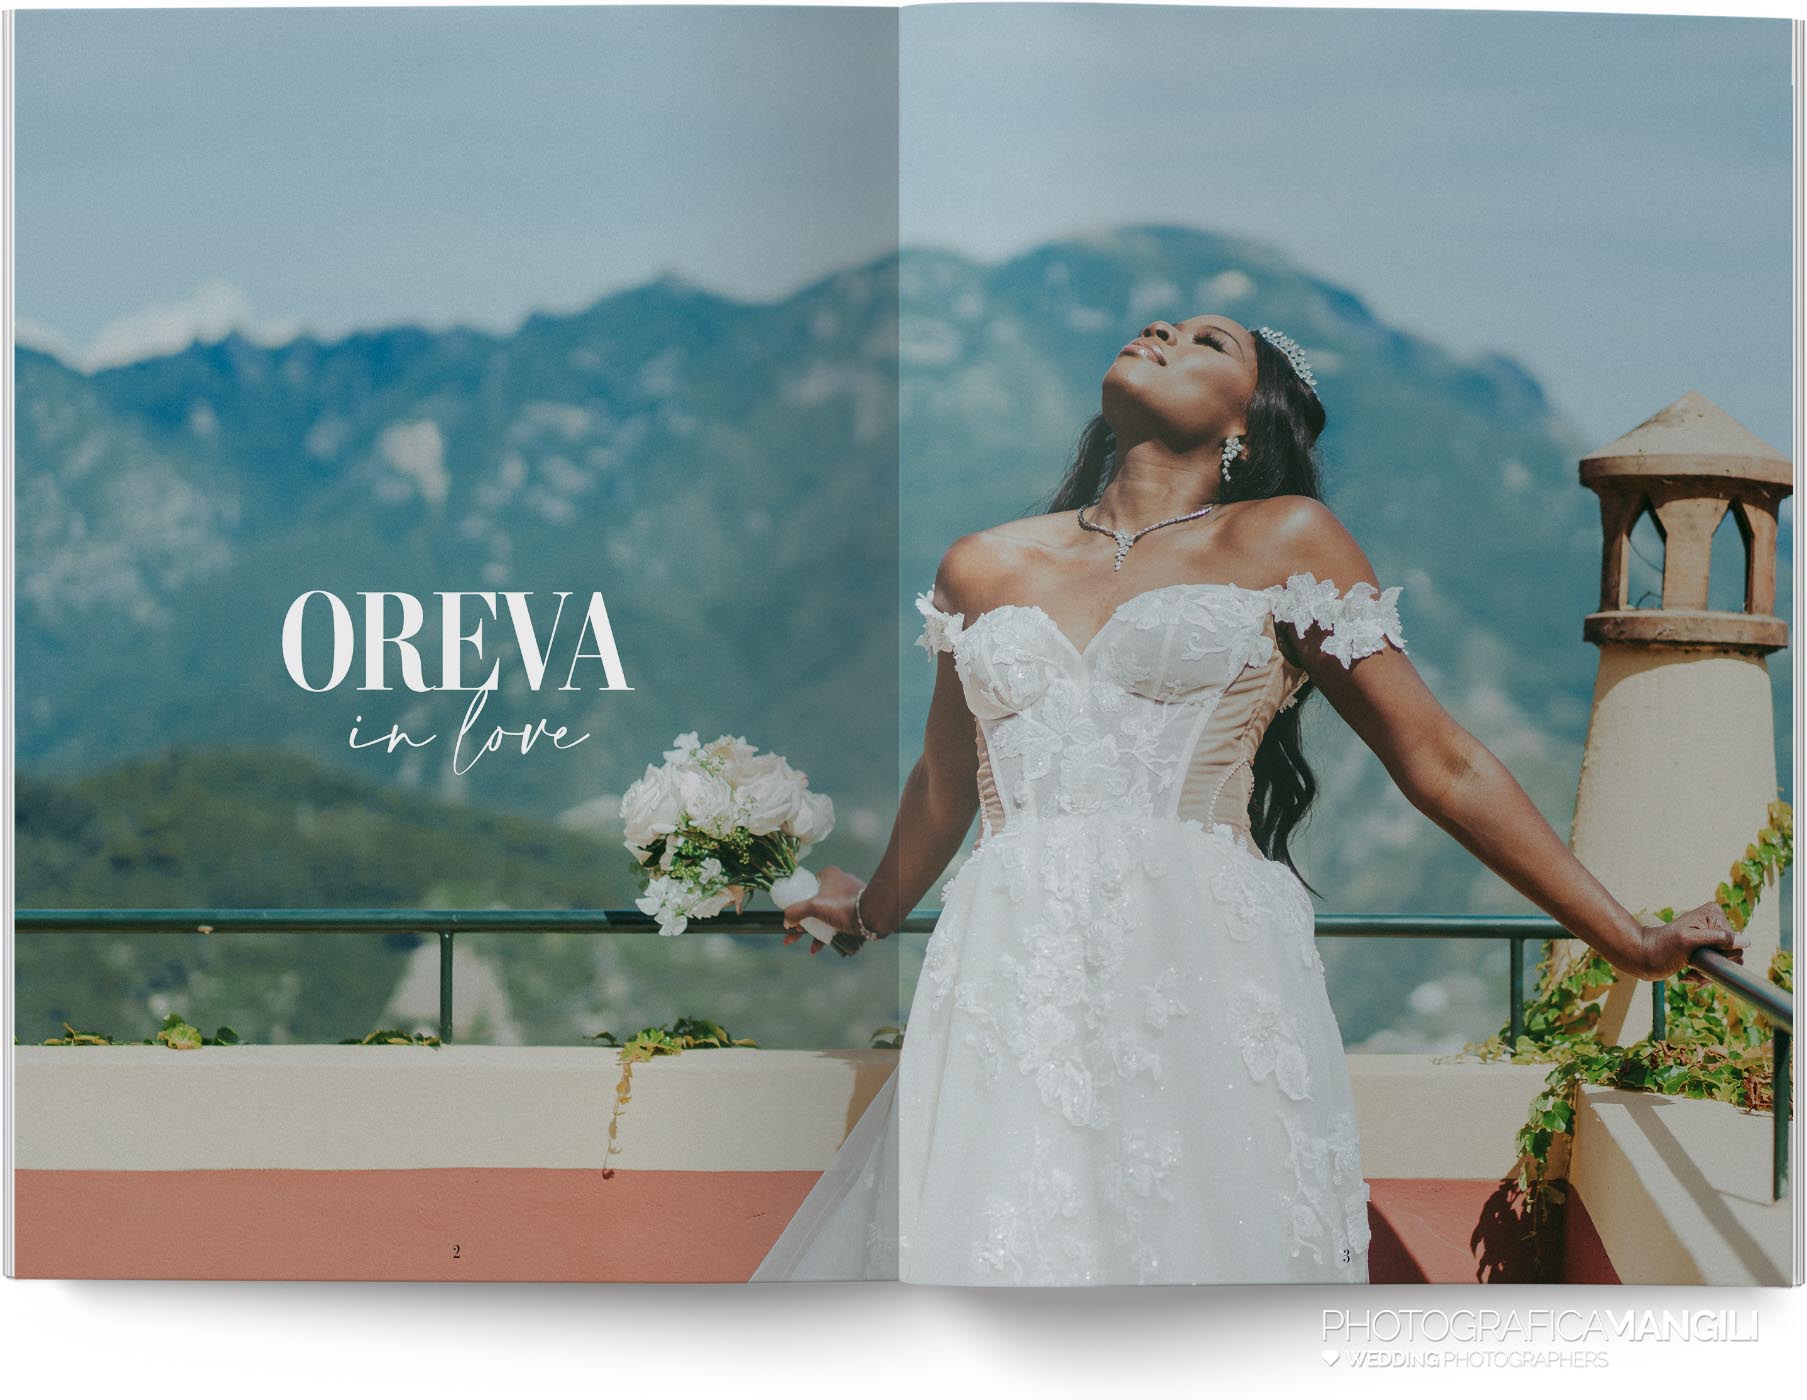 wedding magazine,wedding magazine photo book,wedding magazines,creative wedding album,creative wedding album design